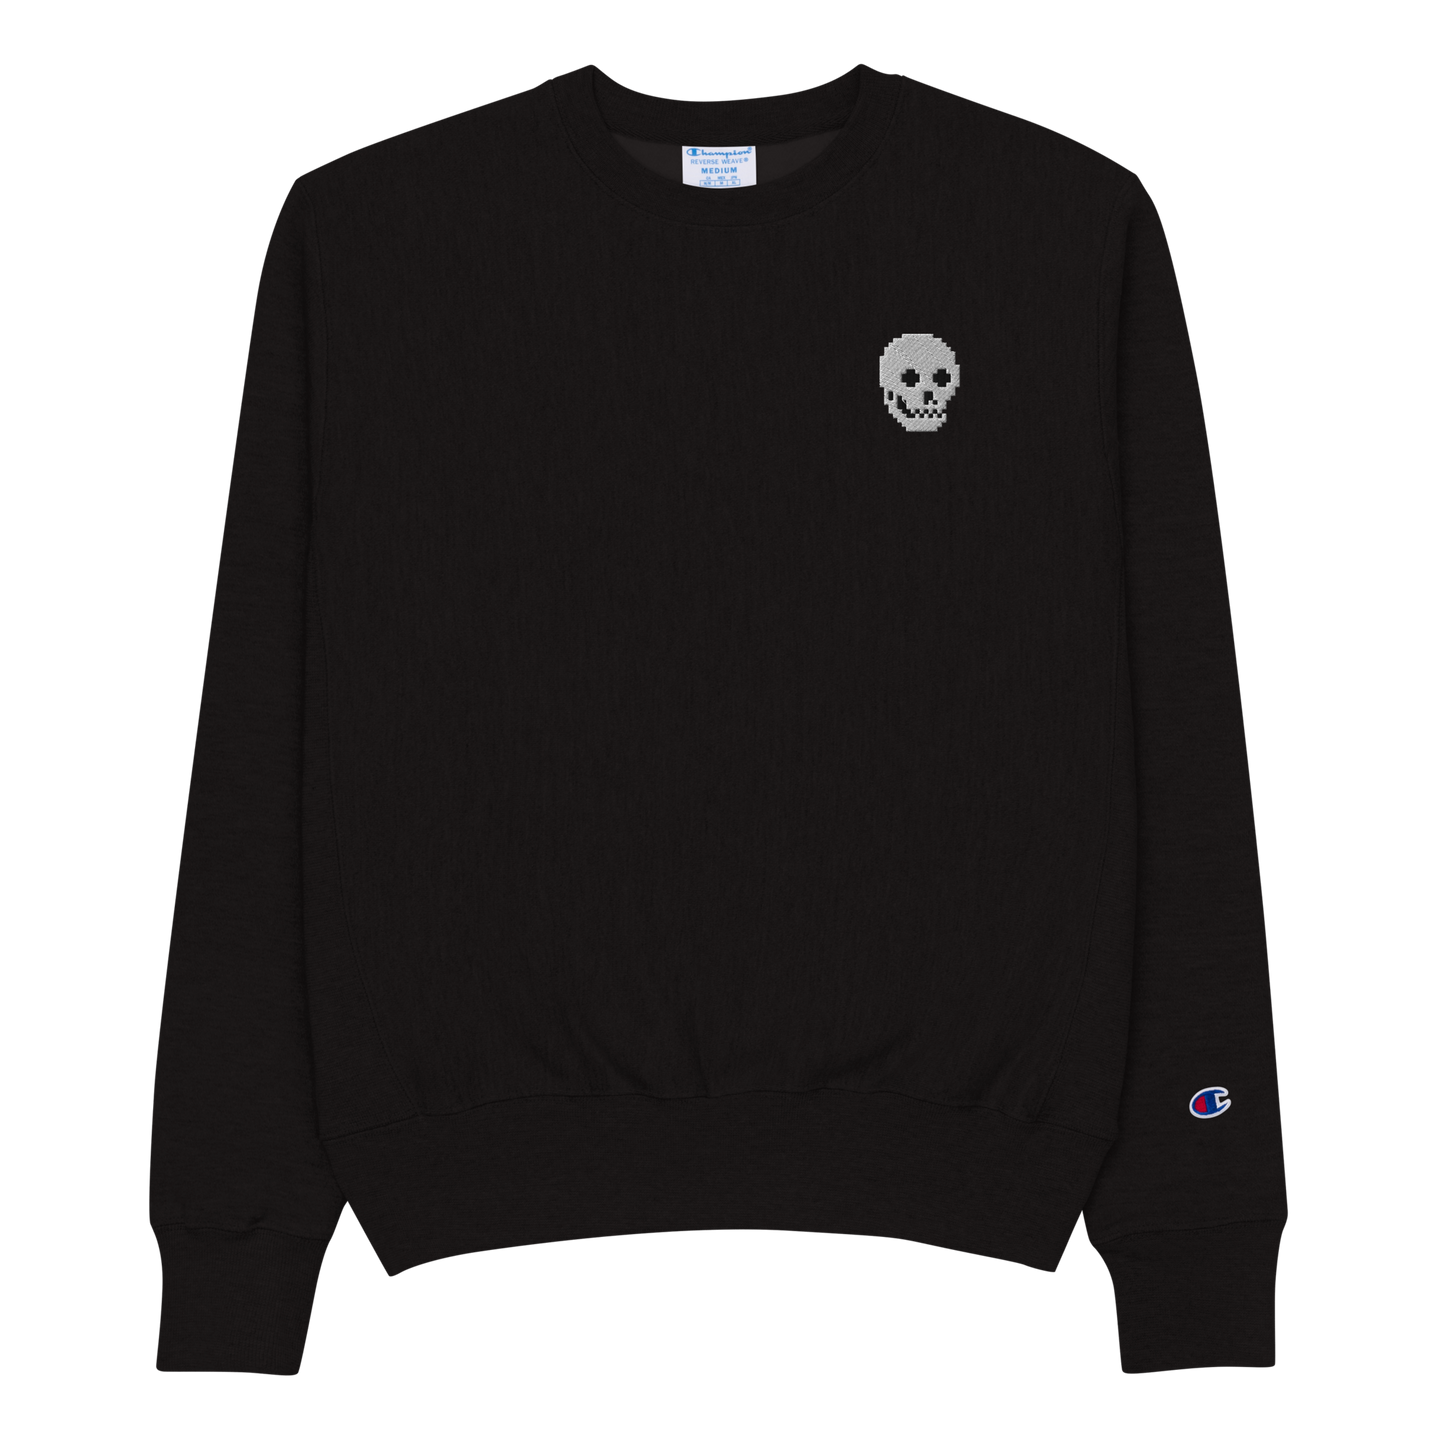 The Ghoul Champion Sweatshirt